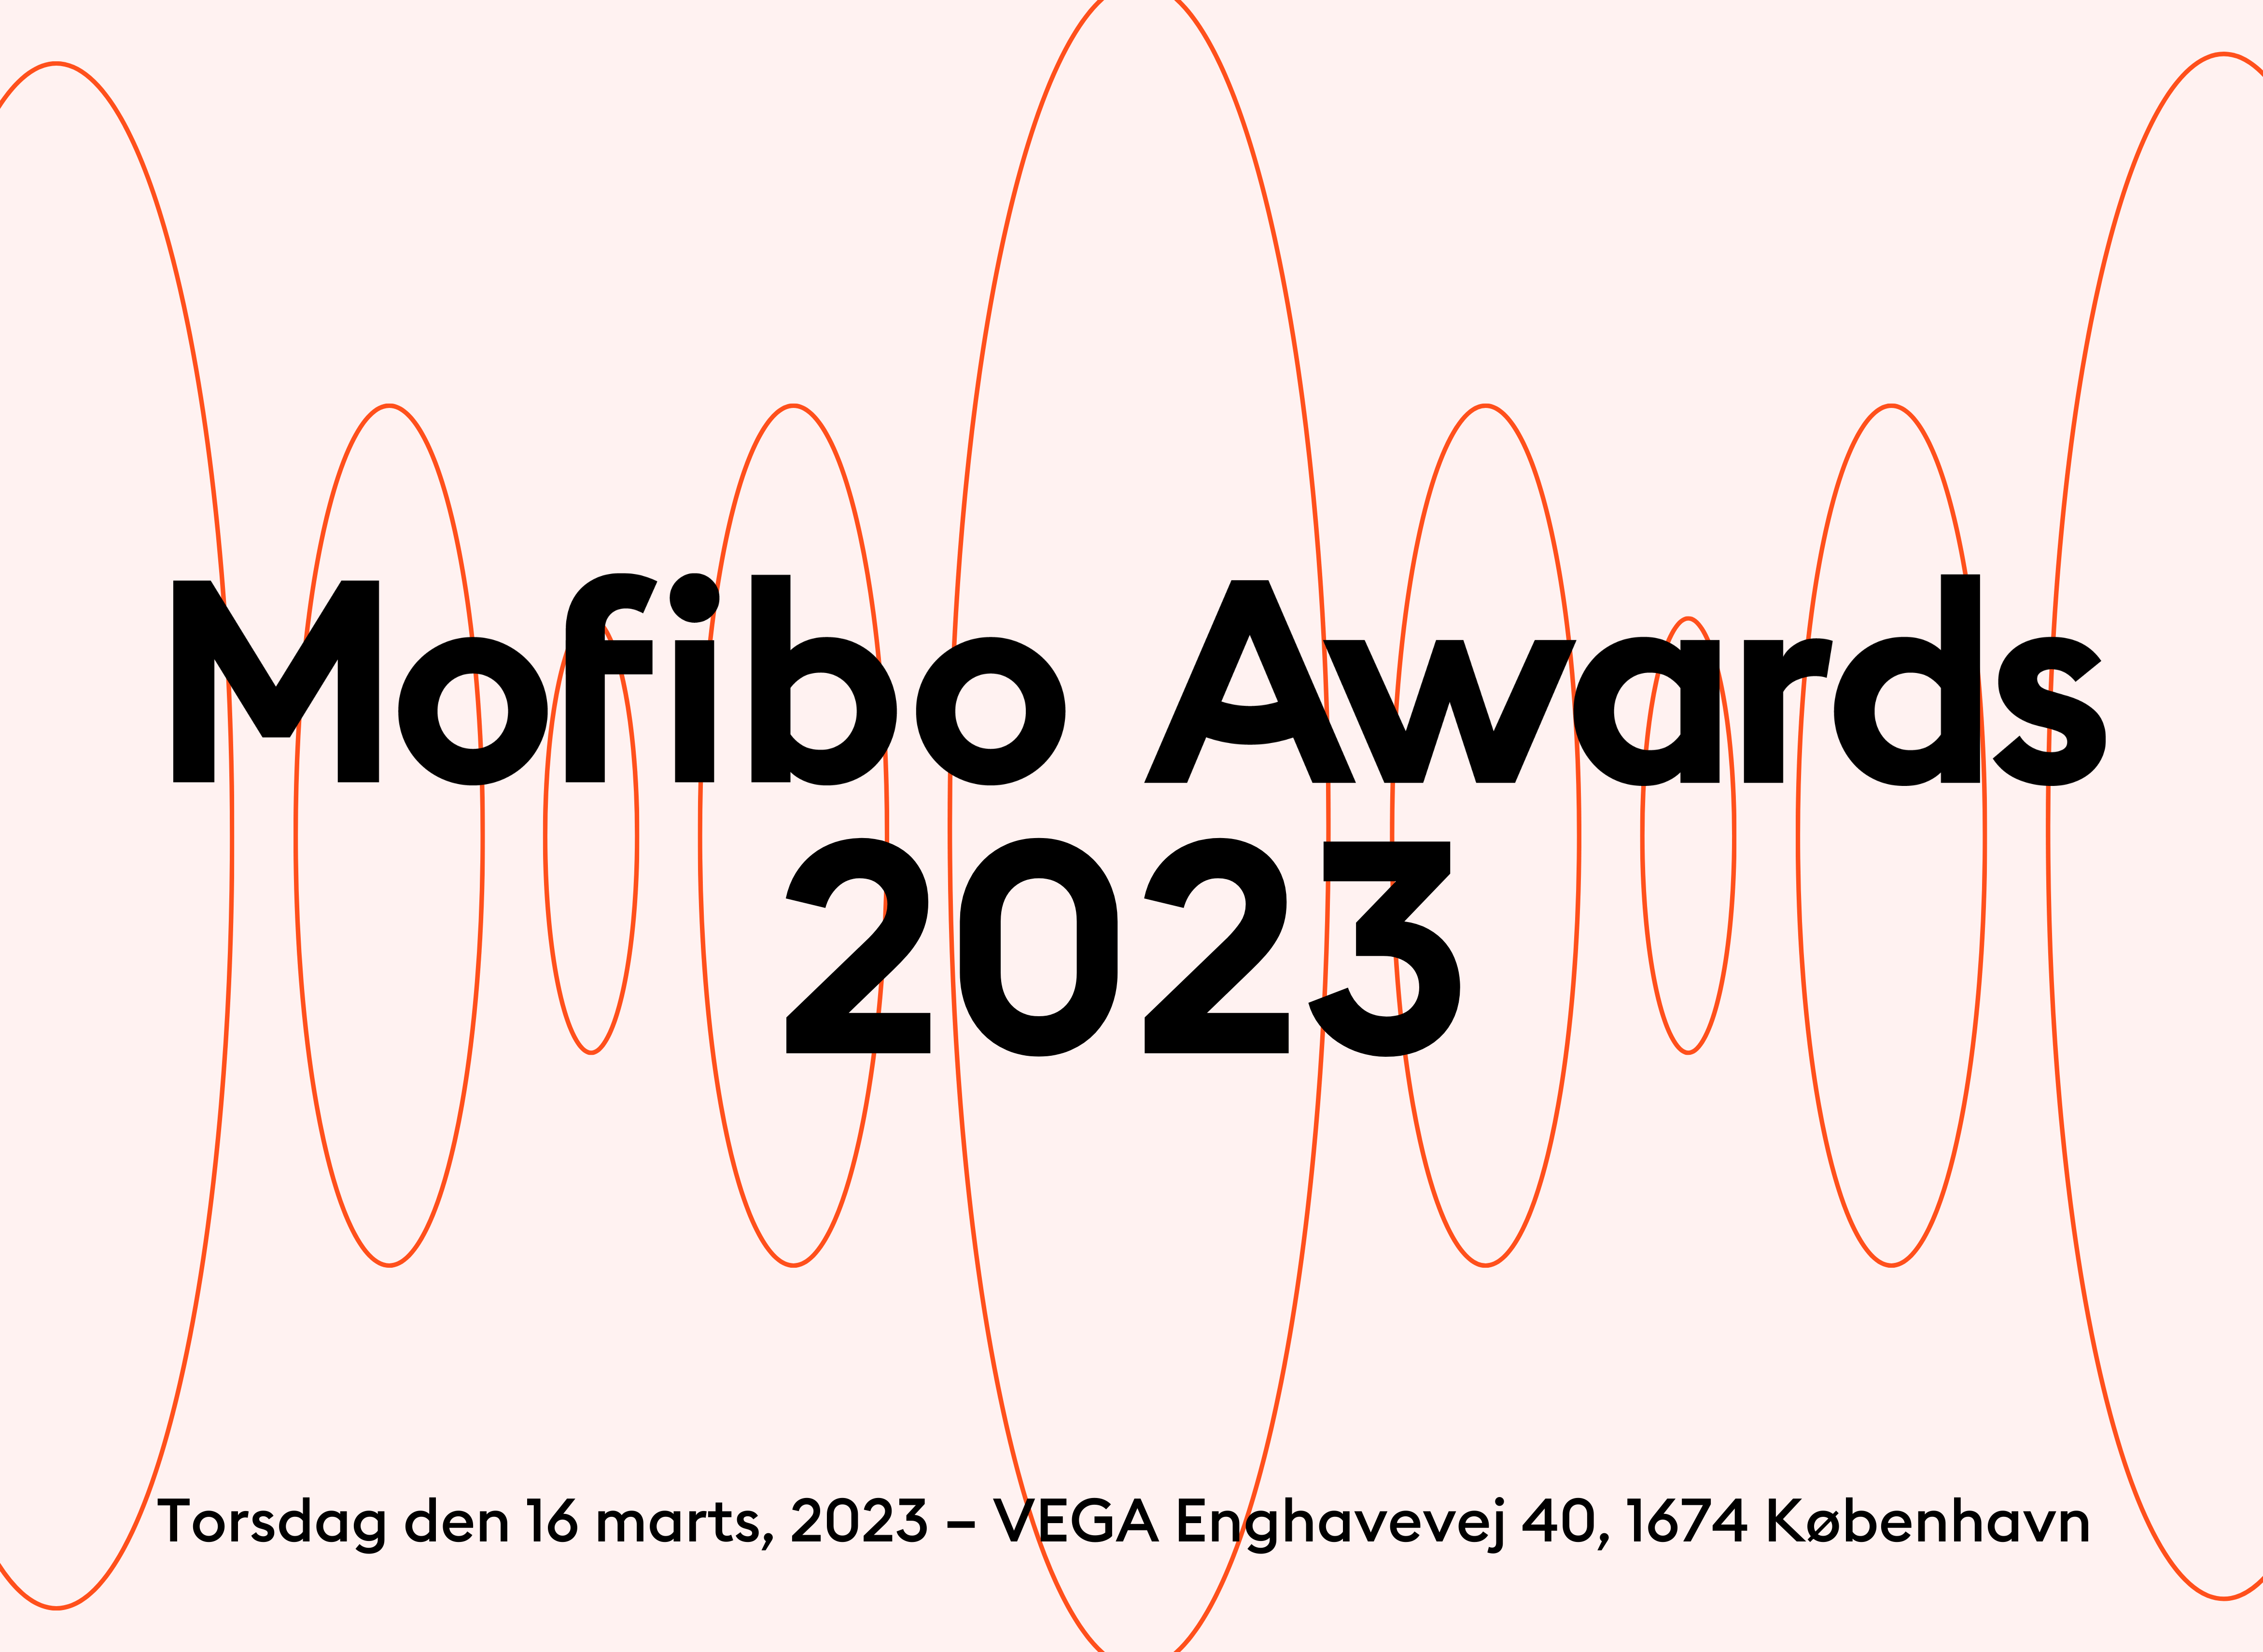 Mofibo Awards presale information on freepresalepasswords.com